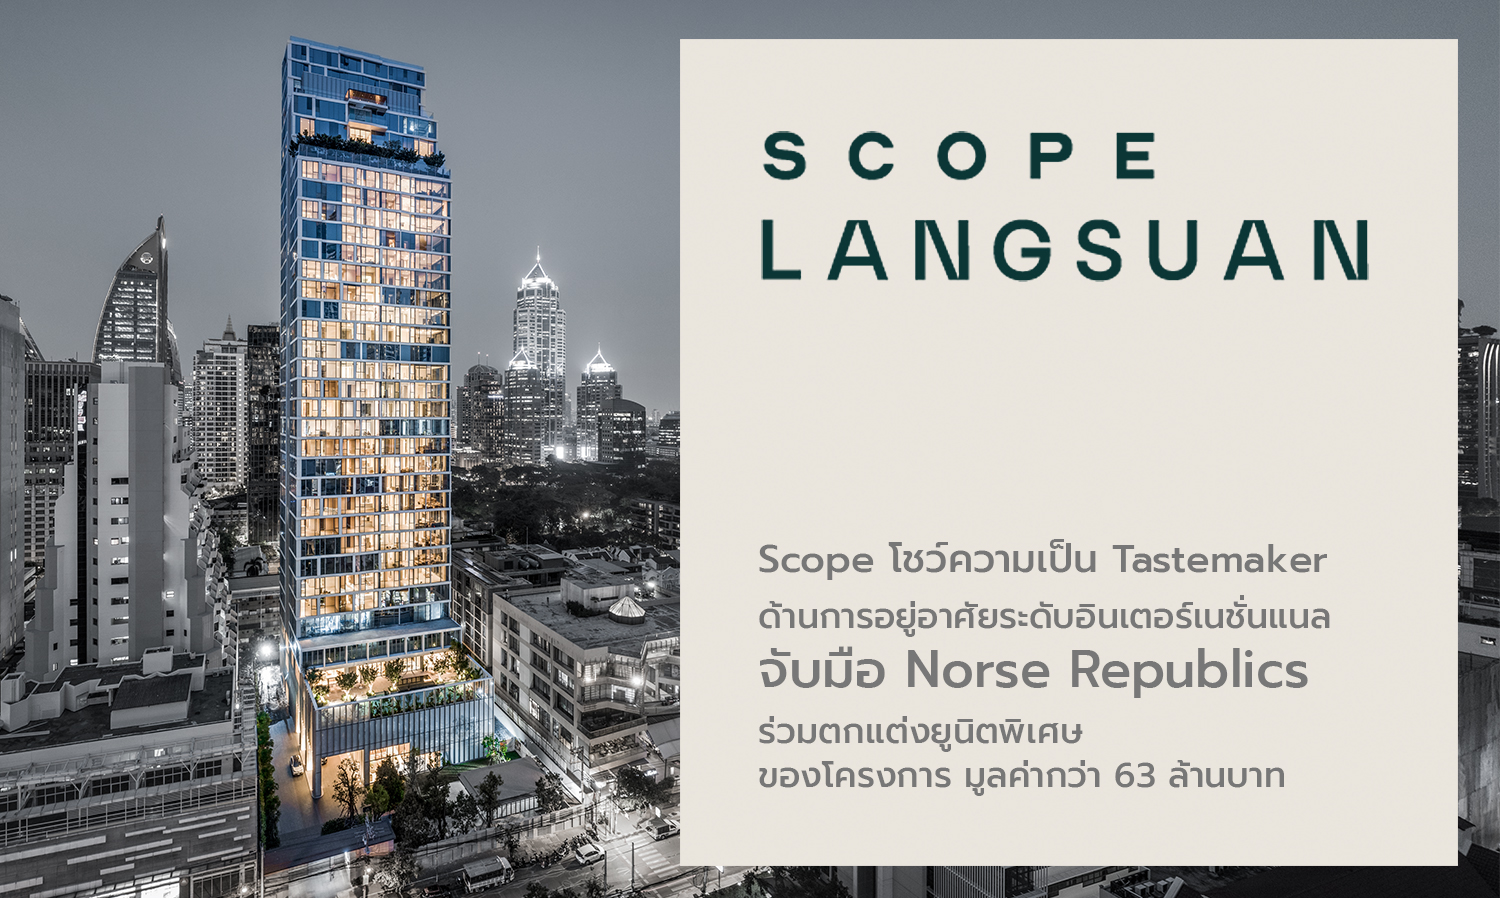 Scope โชว์ความเป็น Tastemaker ด้านการอยู่อาศัยระดับอินเตอร์เนชั่นแนล จับมือ Norse Republics ร่วมตกแต่งยูนิตพิเศษของโครงการ Scope Langsuan  มูลค่ากว่า 63 ล้านบาทในจำนวนจำกัด ภายใต้คอนเซ็ปต์ Daring & Timeless Elegant